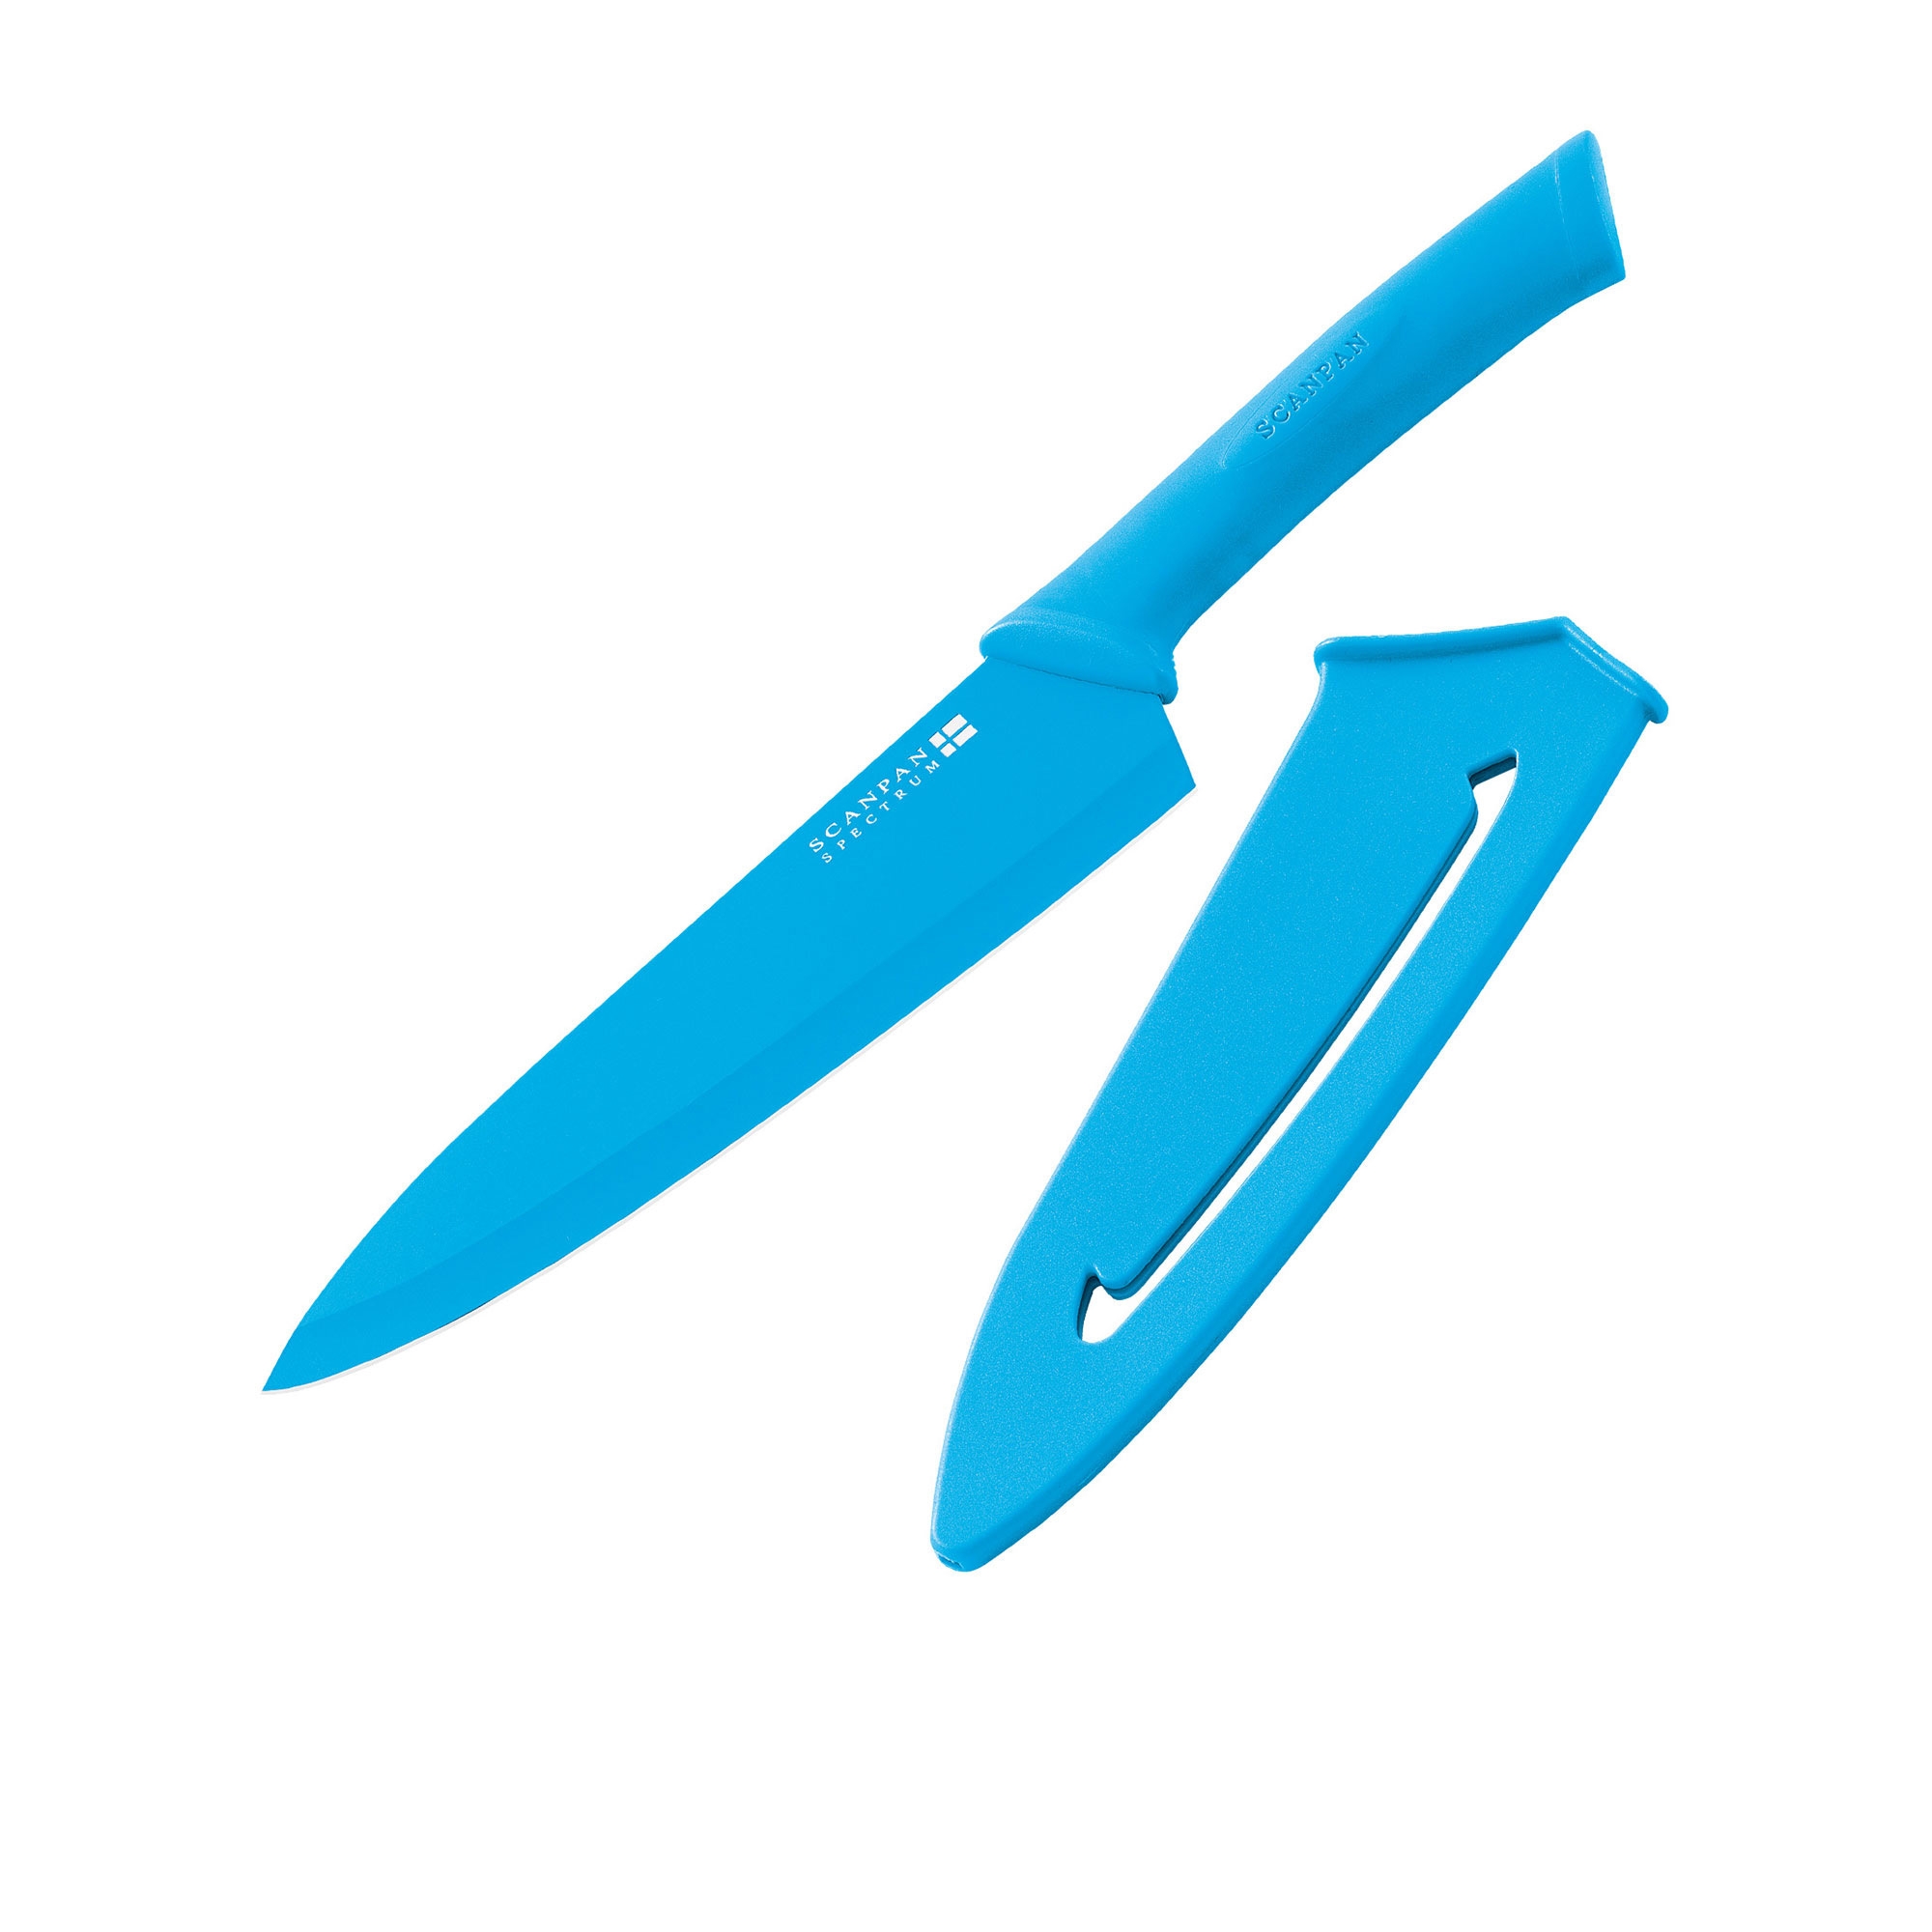 Scanpan Spectrum Soft Touch Cooks Knife 18cm Blue Image 1